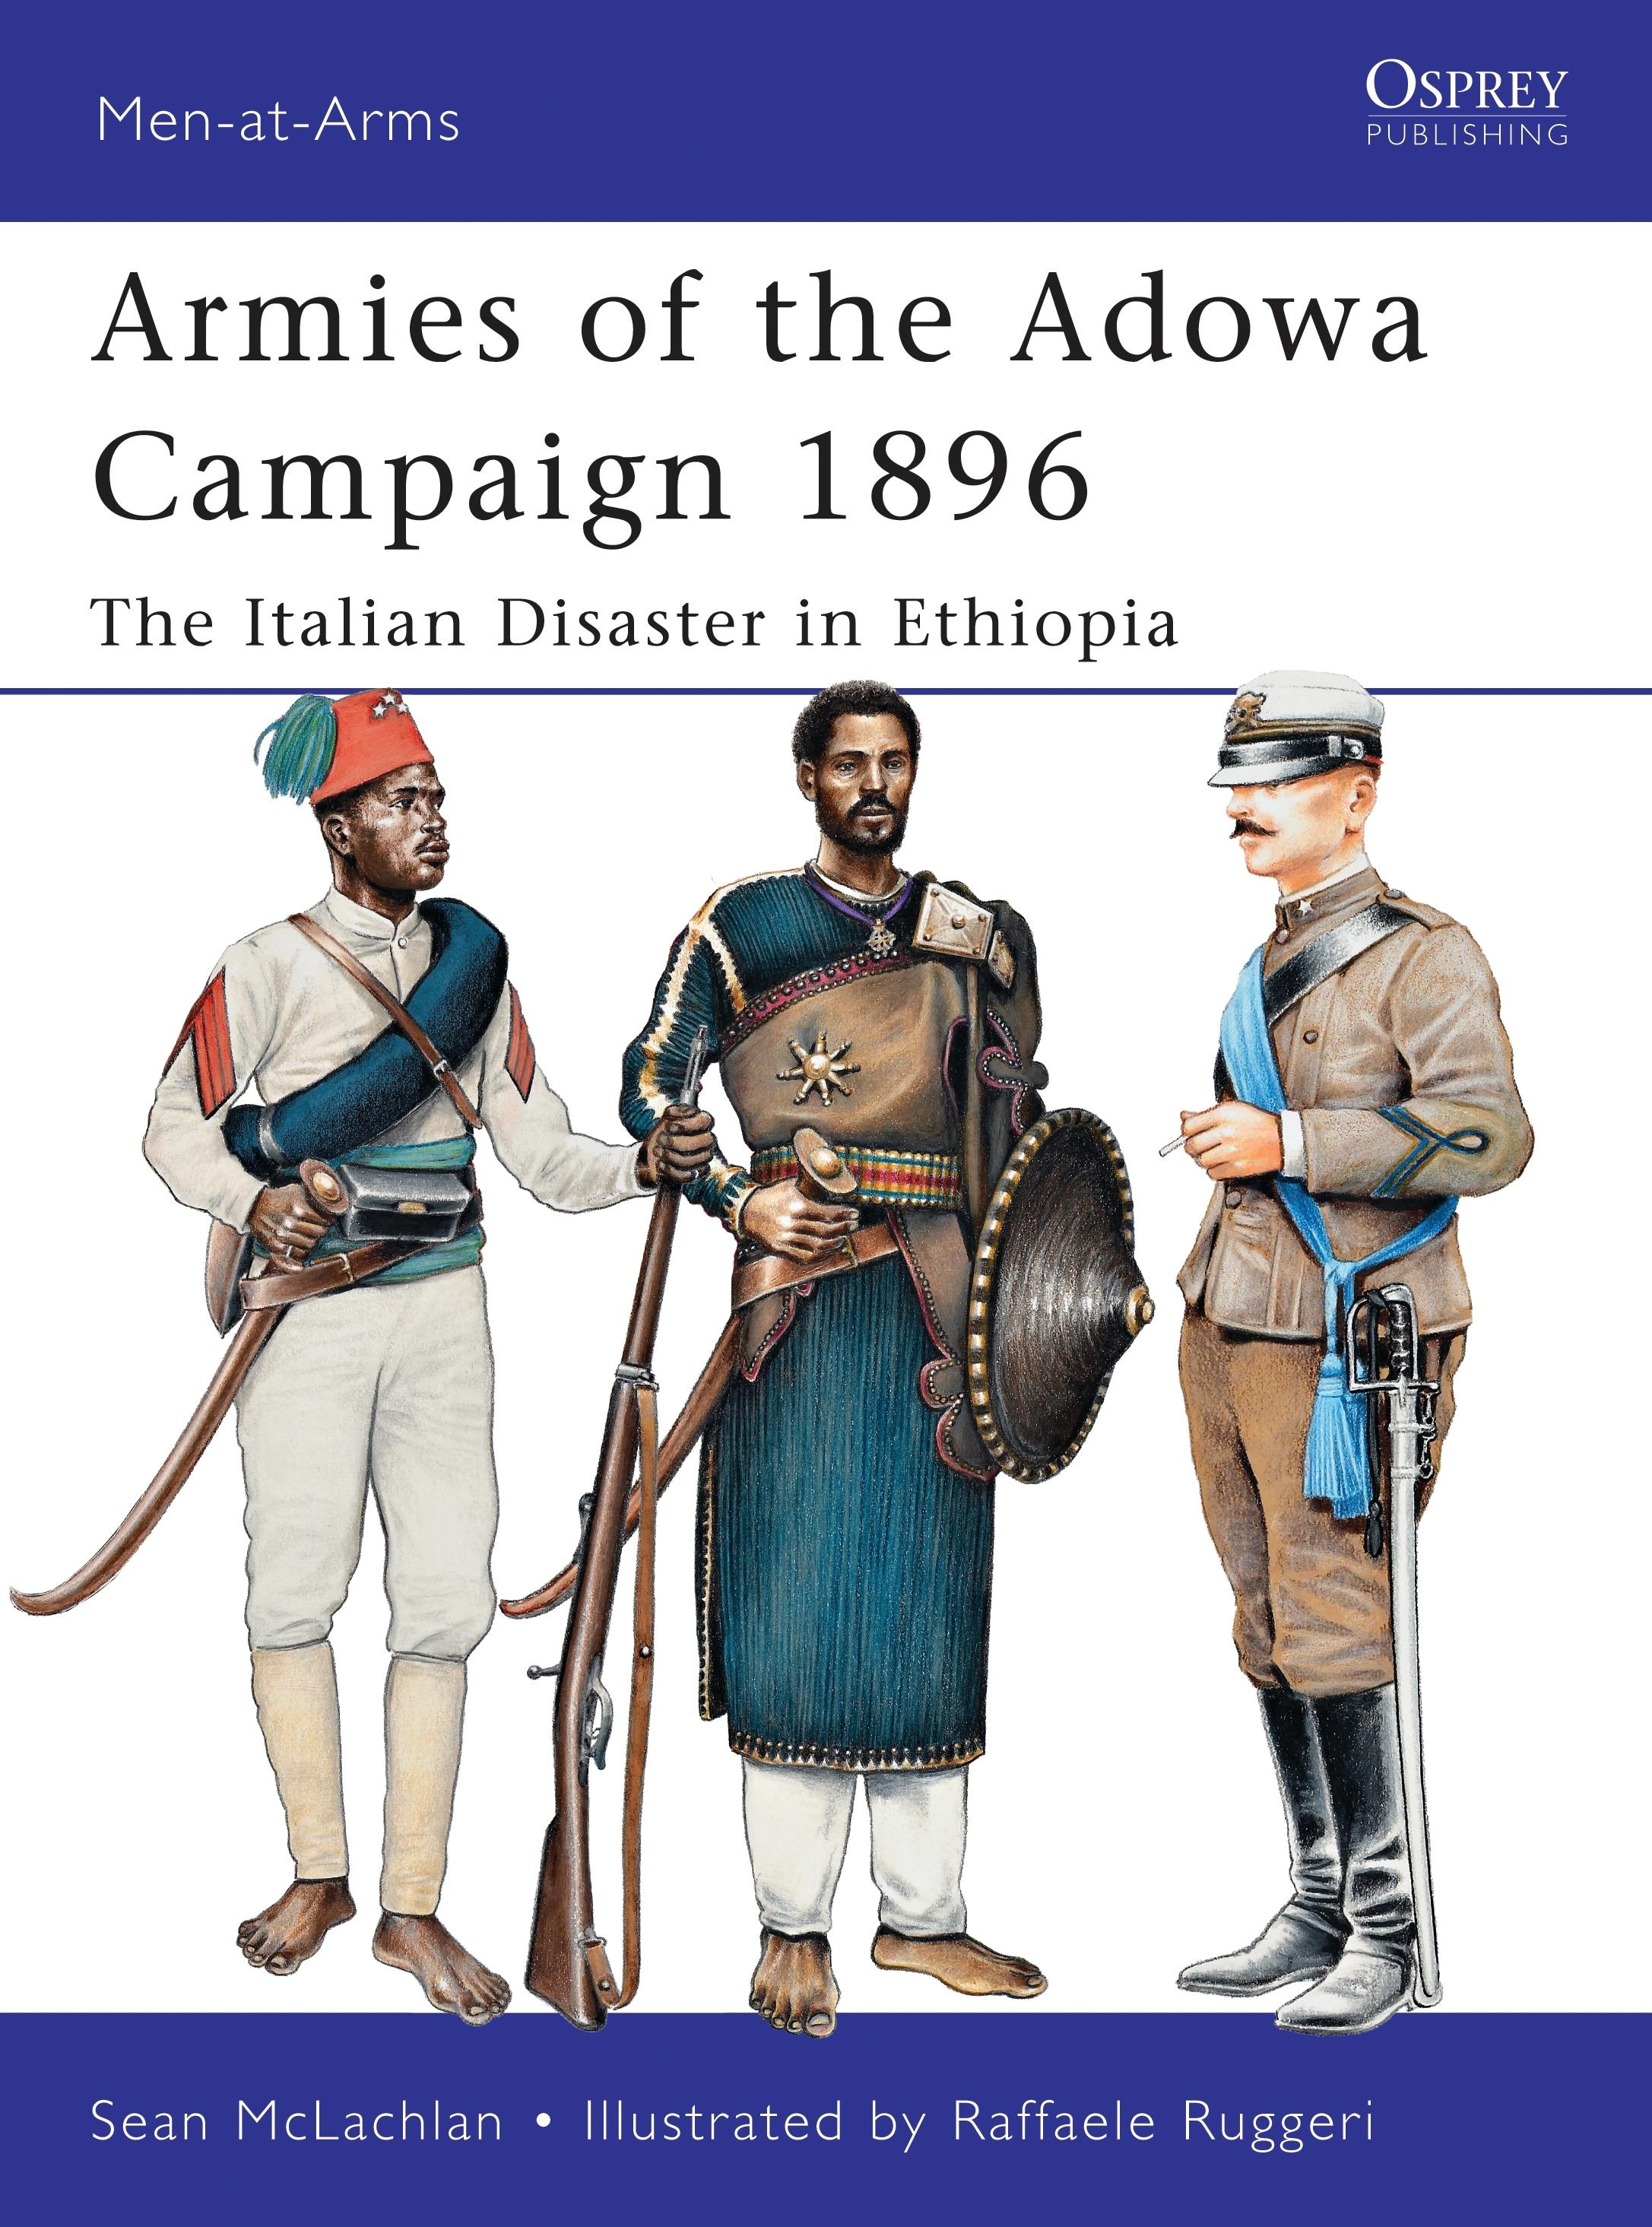 Armies of the Adowa Campaign 1896: The Italian Disaster in Ethiopia / Sean Mclachlan / Taschenbuch / Men-At-Arms (Osprey) / Englisch / 2011 / OSPREY PUB INC / EAN 9781849084574 - Mclachlan, Sean